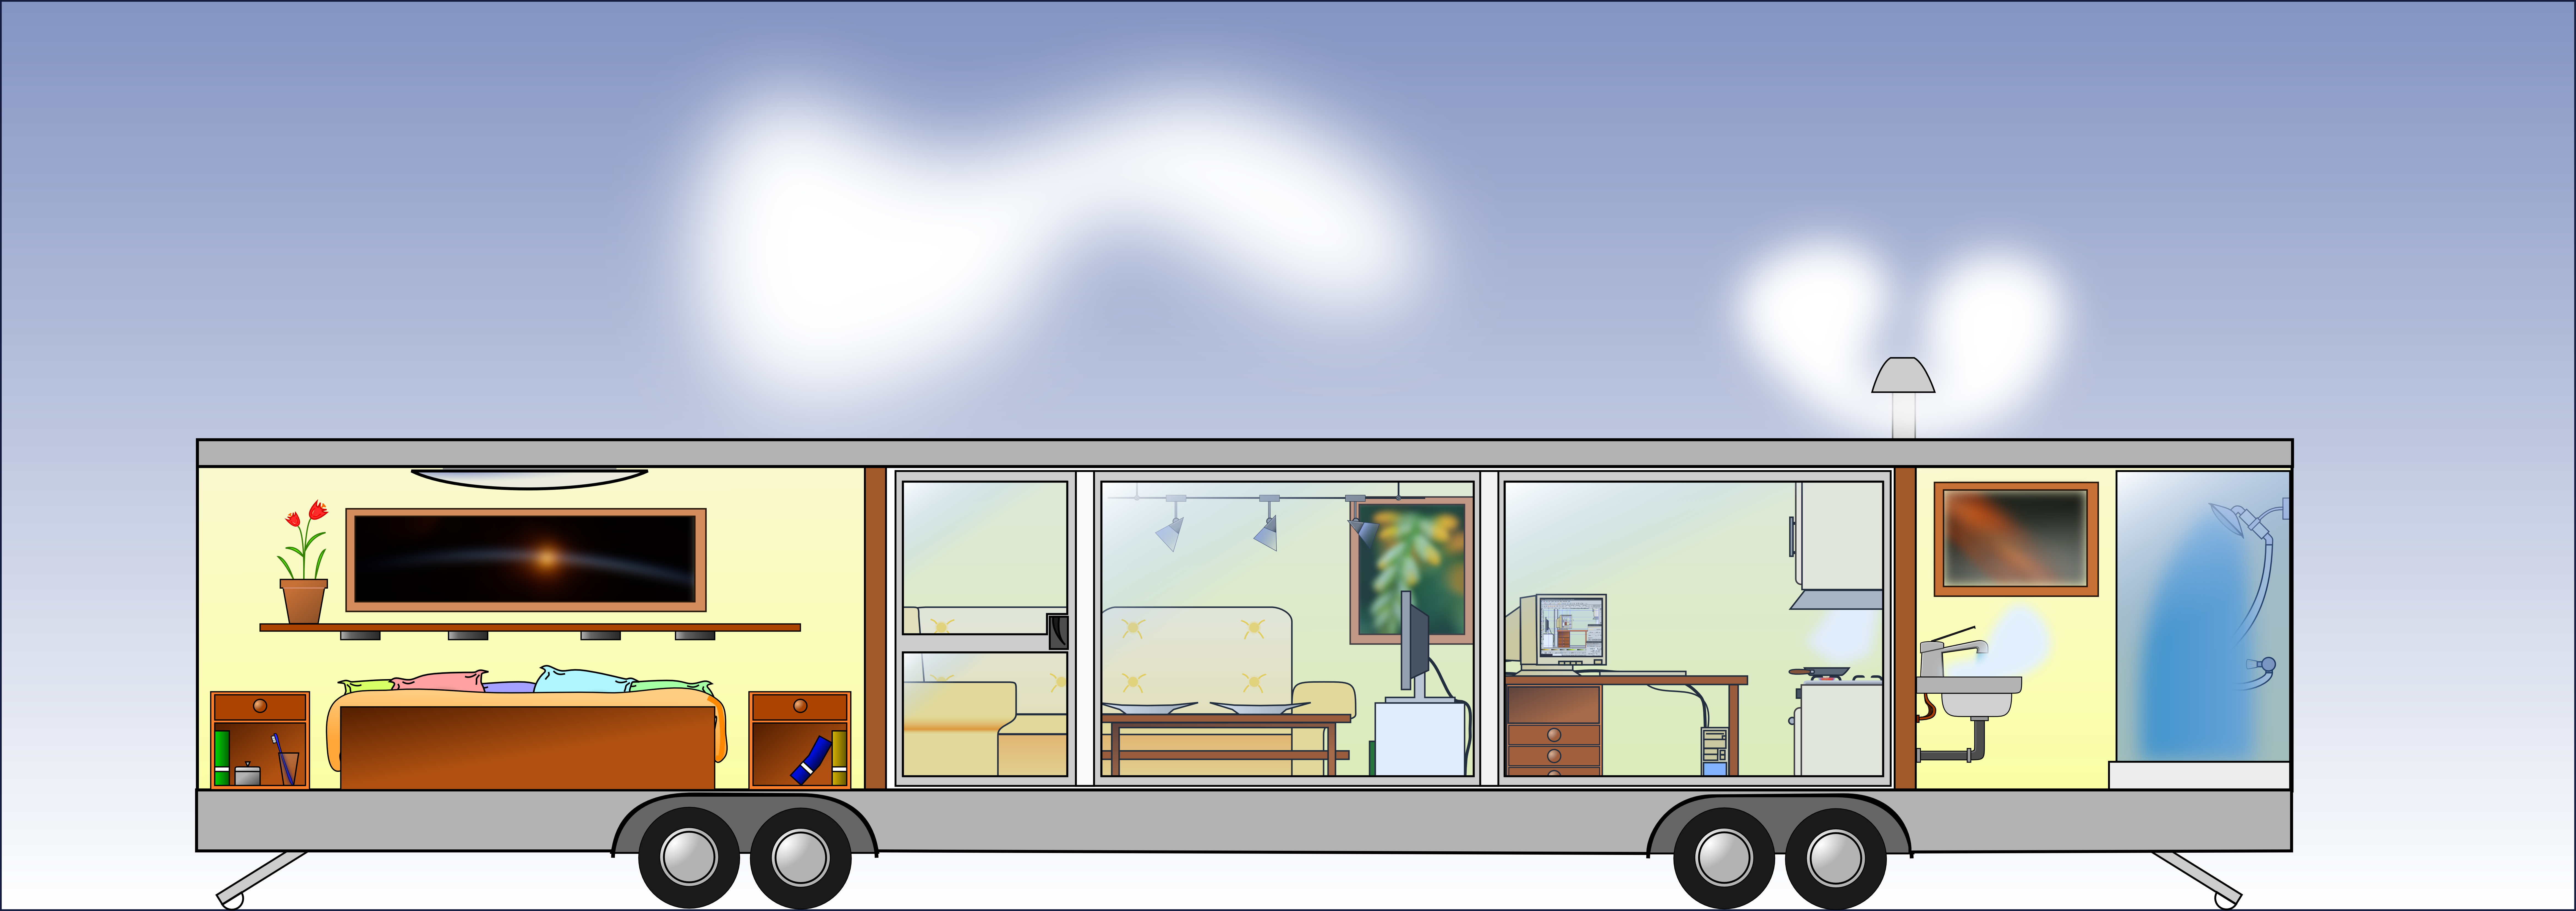 Living Camper aka 'Mobile Home' - total